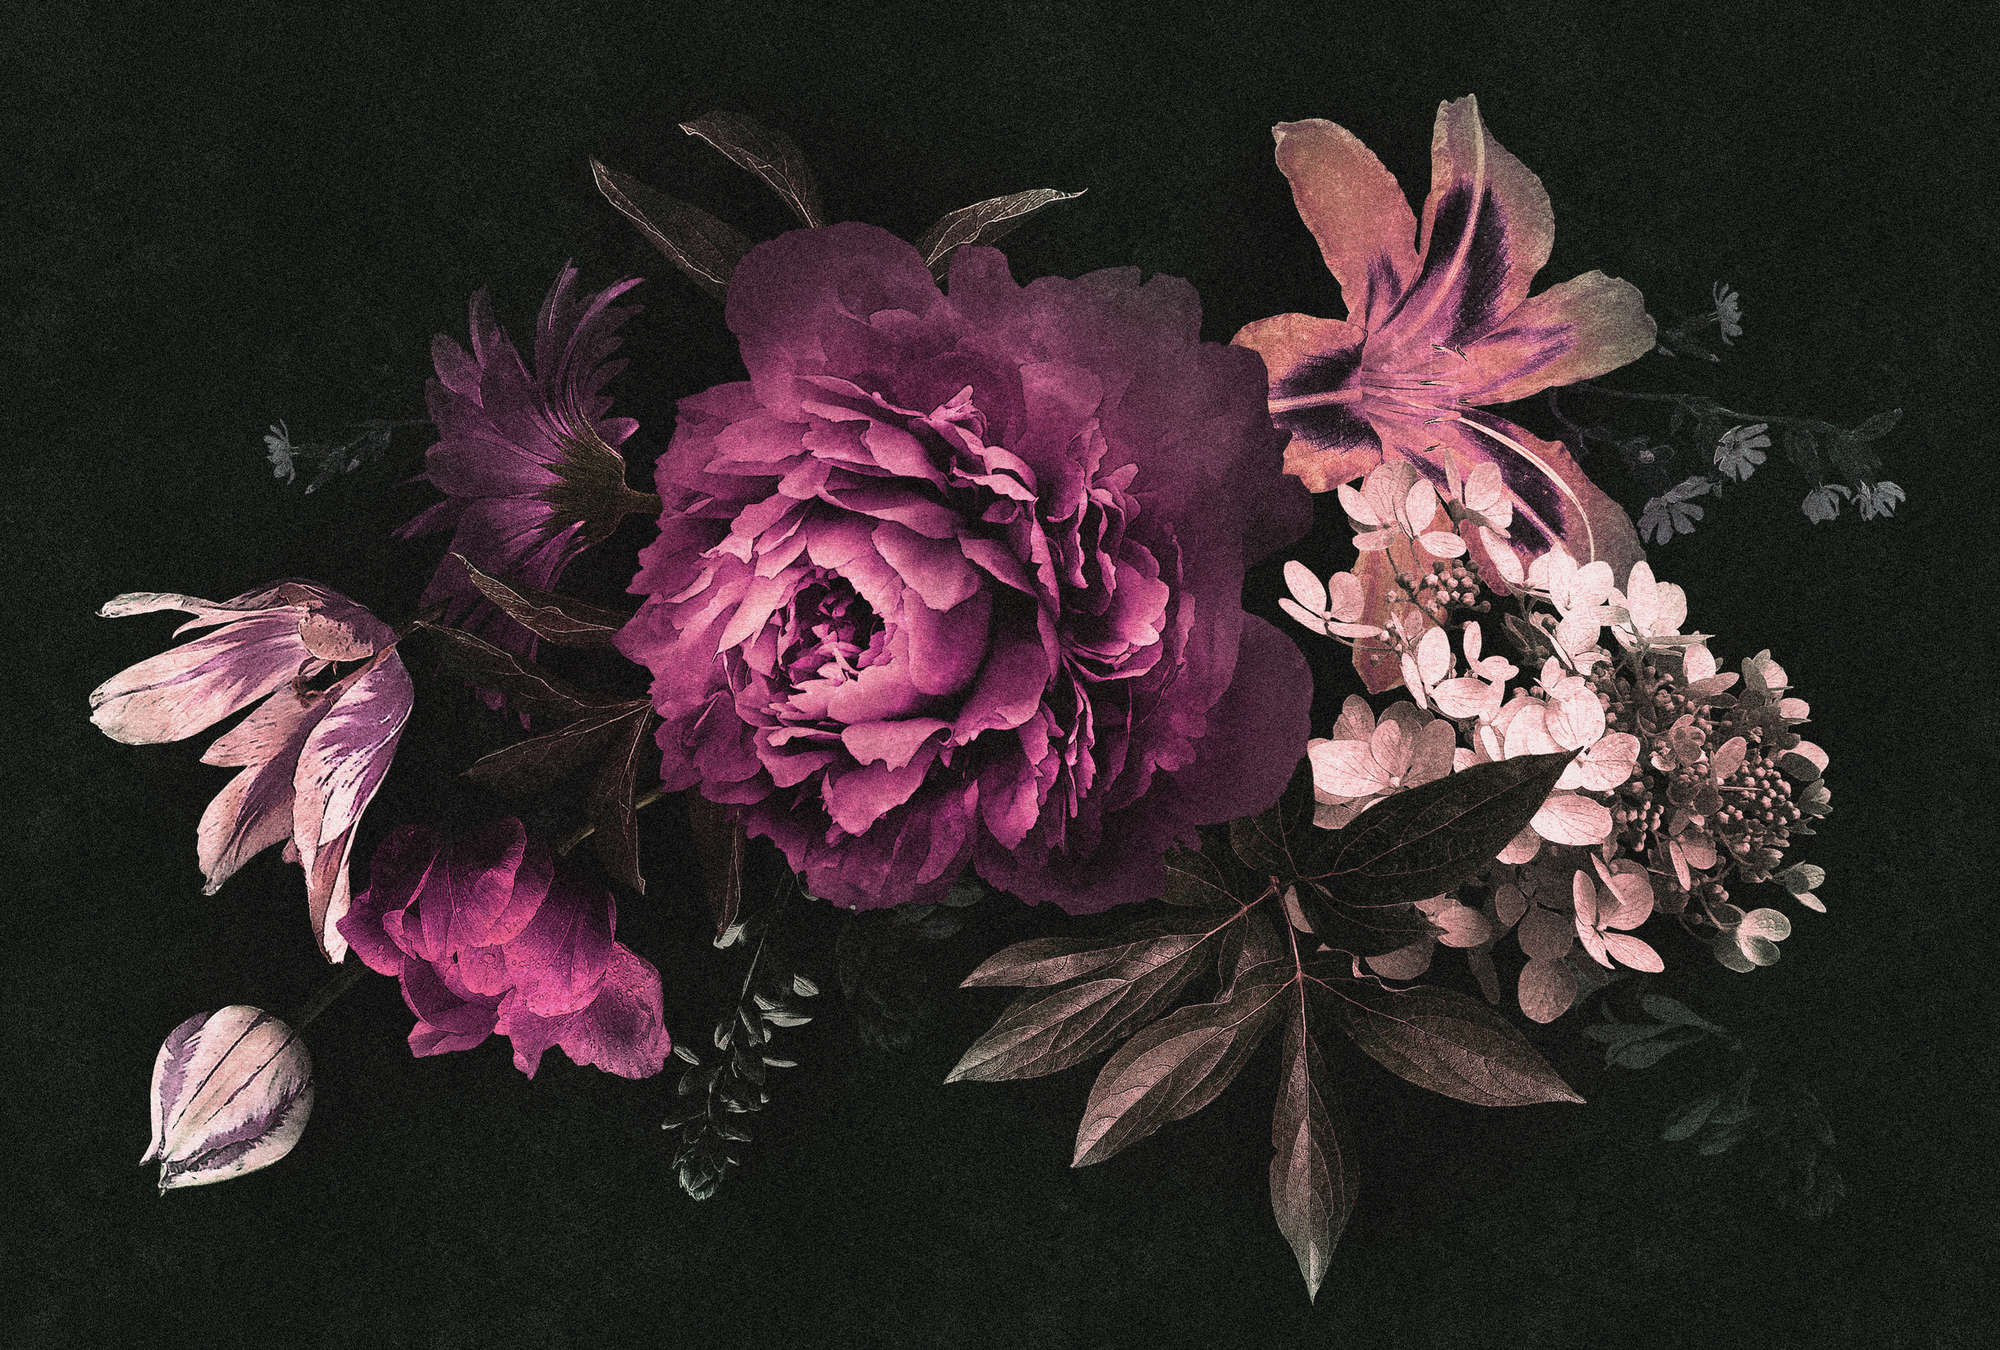             Drama queen 3 - Photo wallpaper romantic bouquet of flowers- Cardboard structure - Pink, Black | Premium smooth fleece
        